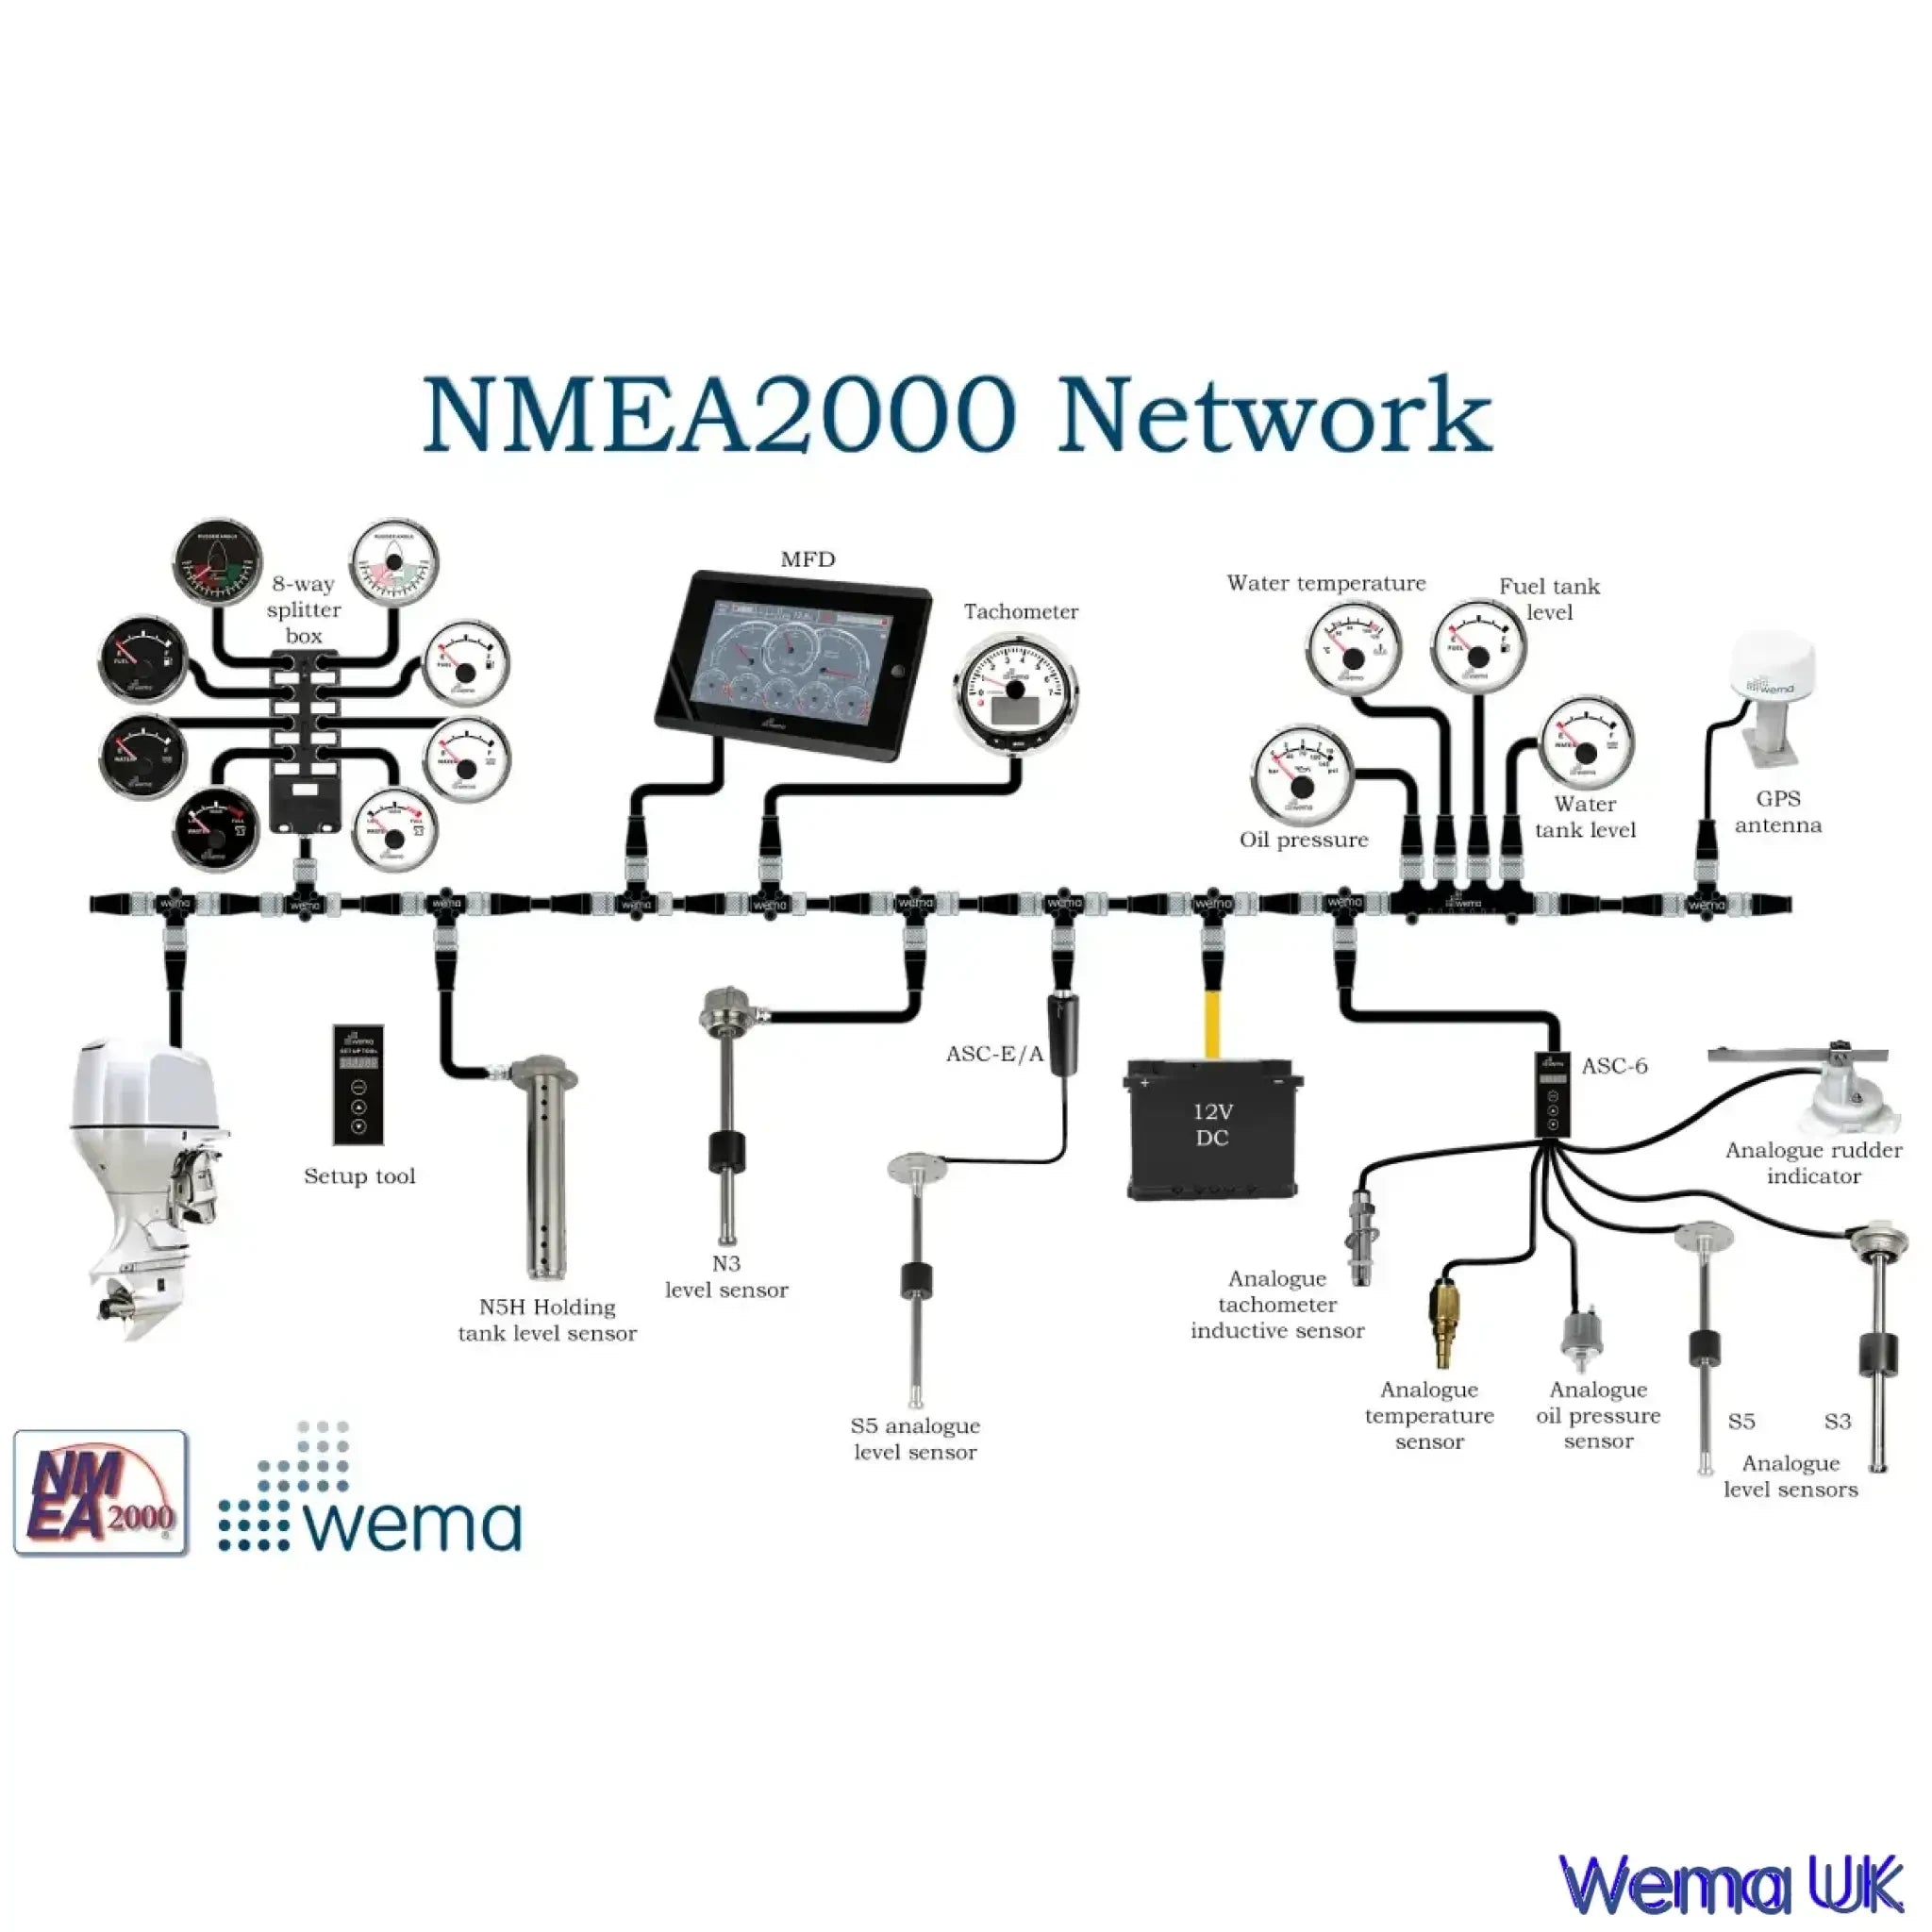 NMEA2000 - 8 Way Splitter Box